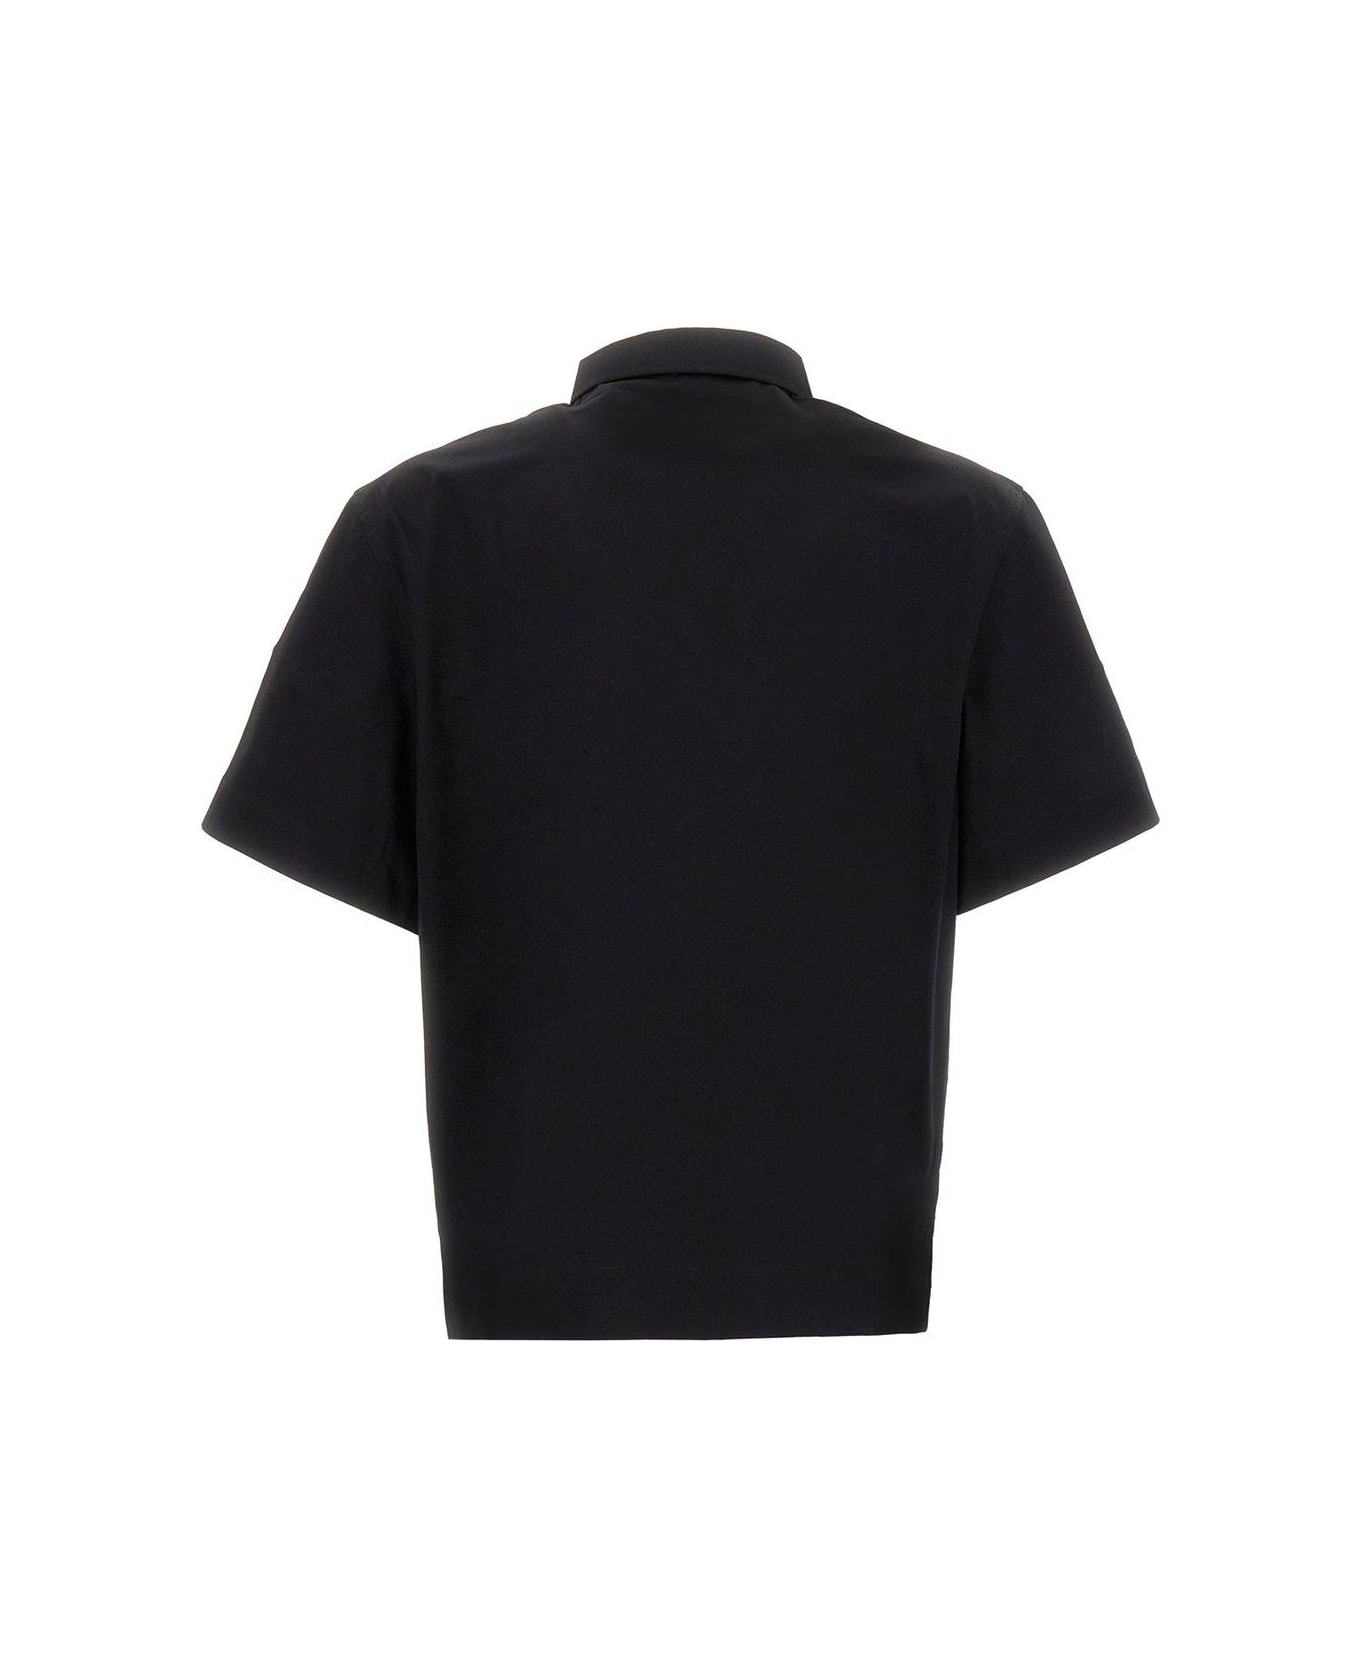 Givenchy disponible Zipped Short-sleeved Shirt